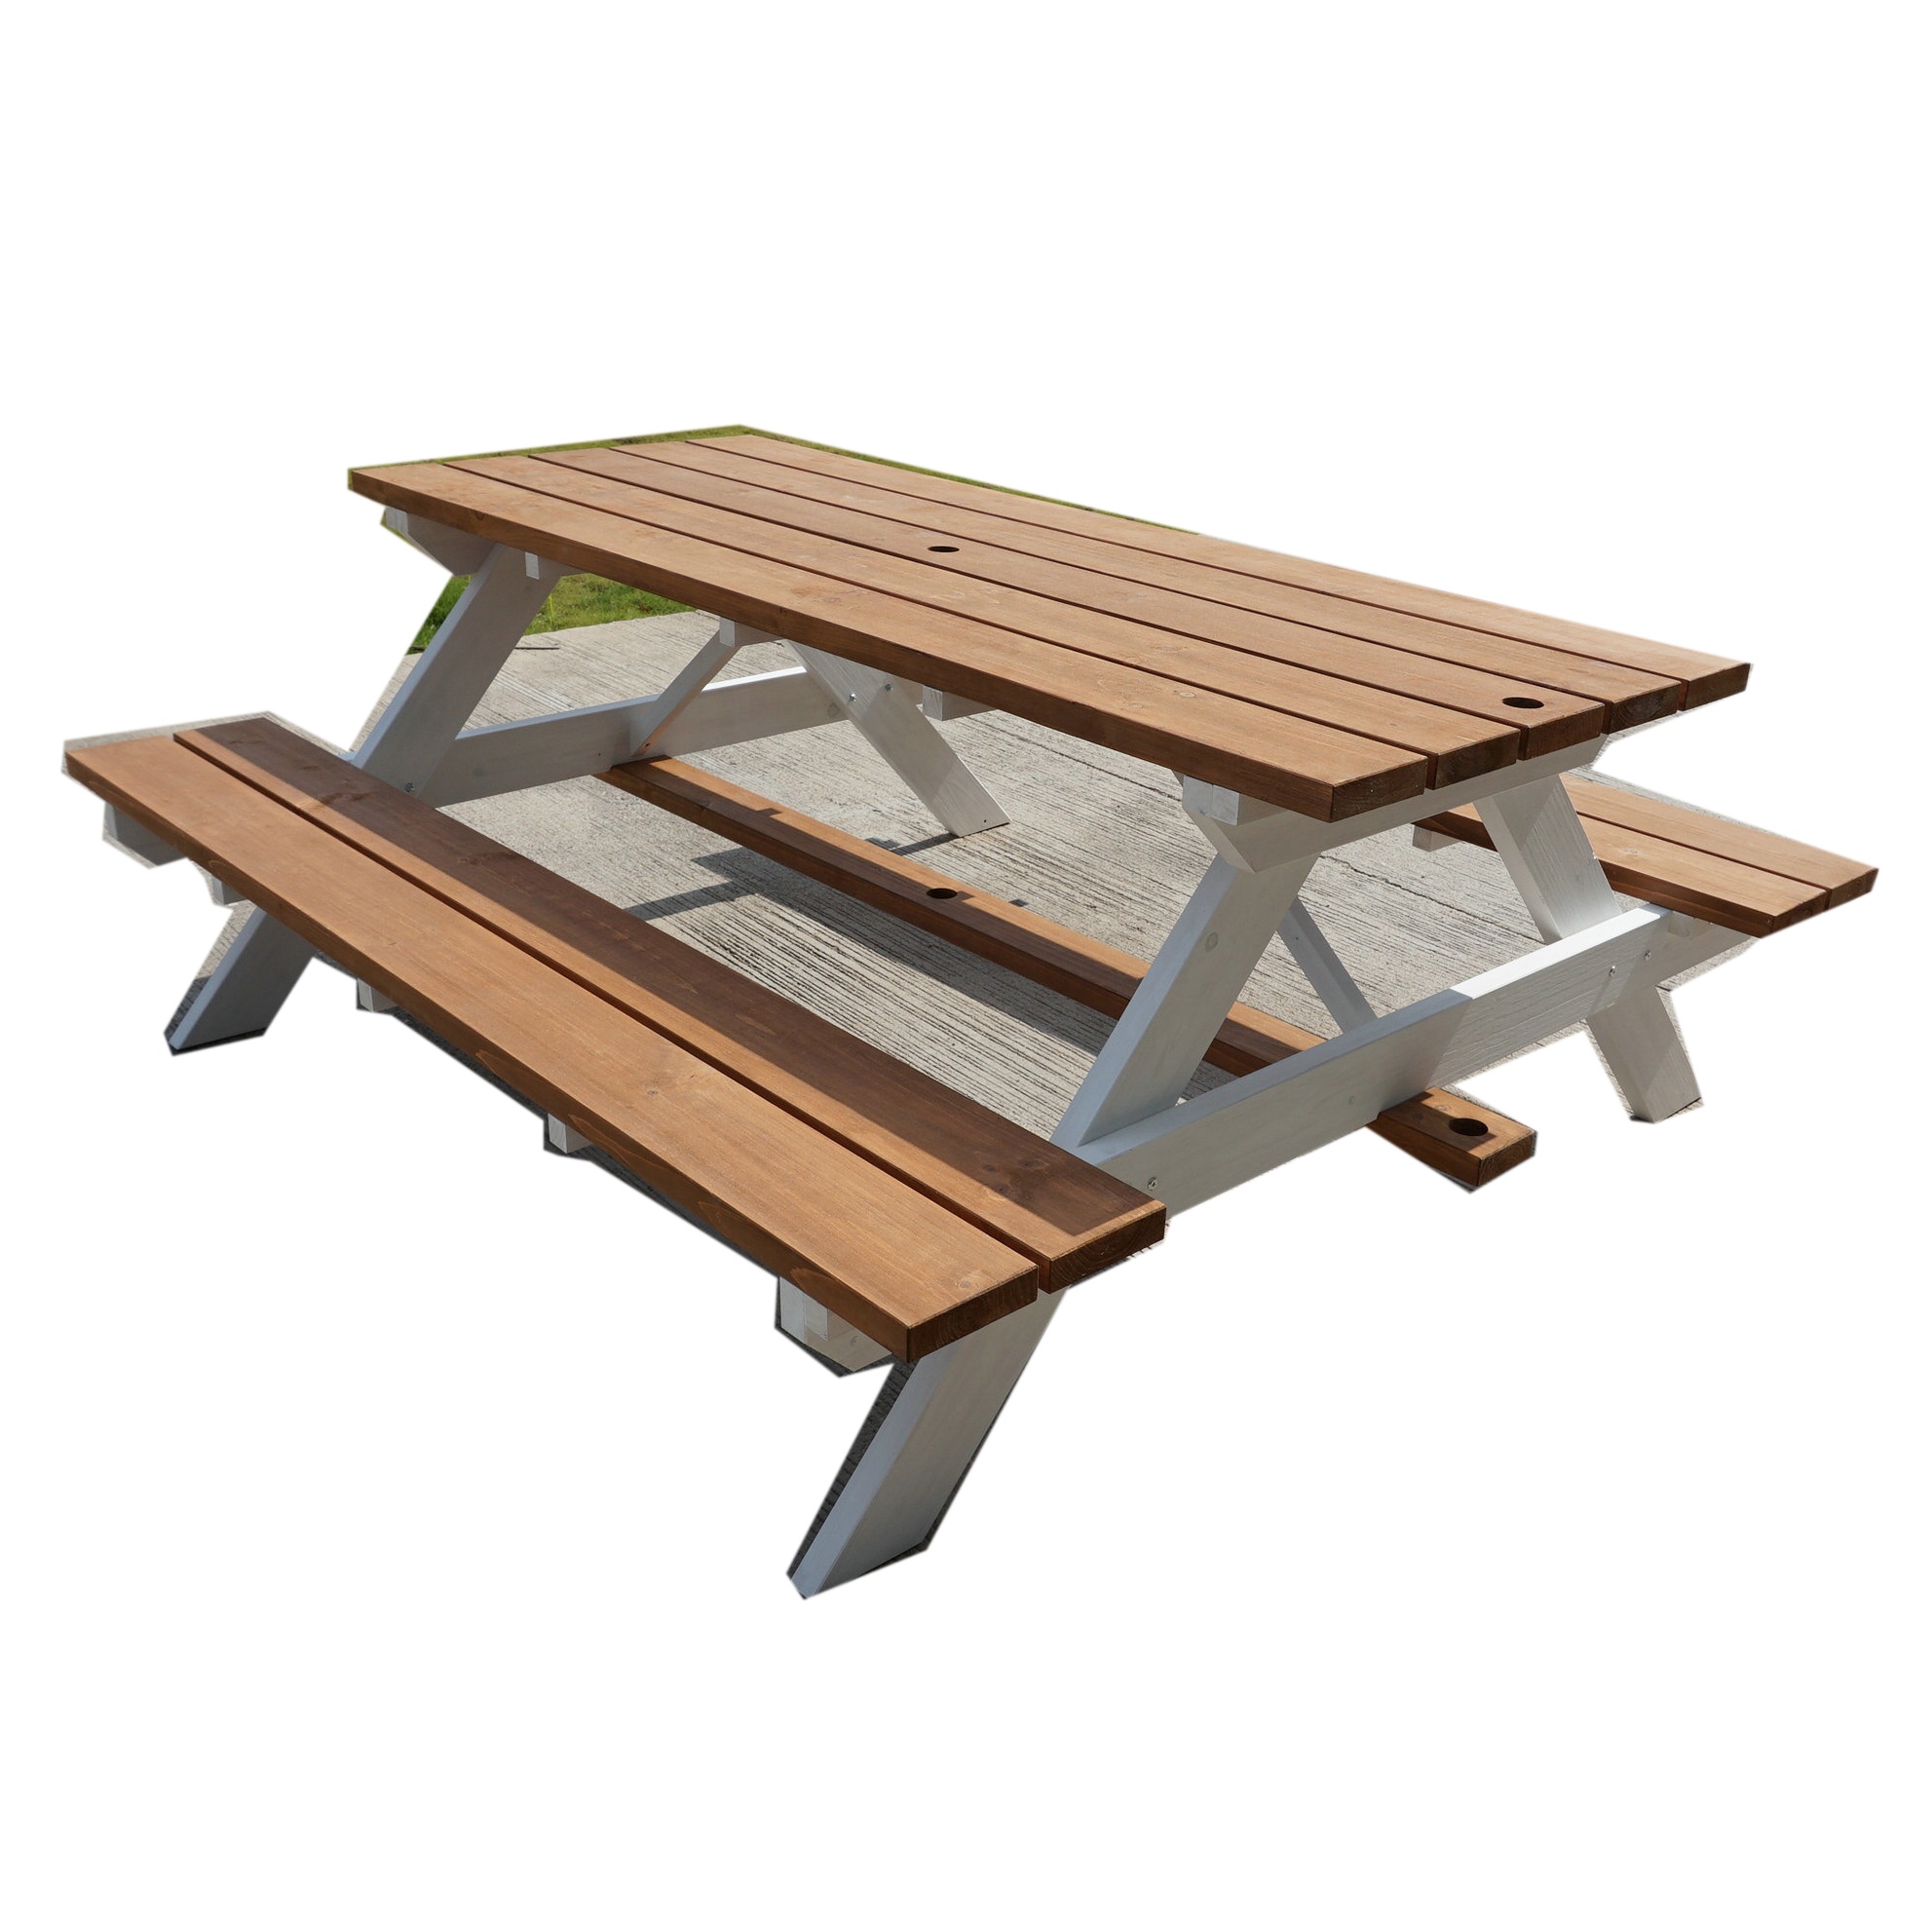 custom wood garden furniture patio bench with canopy umbrella Beach Chair